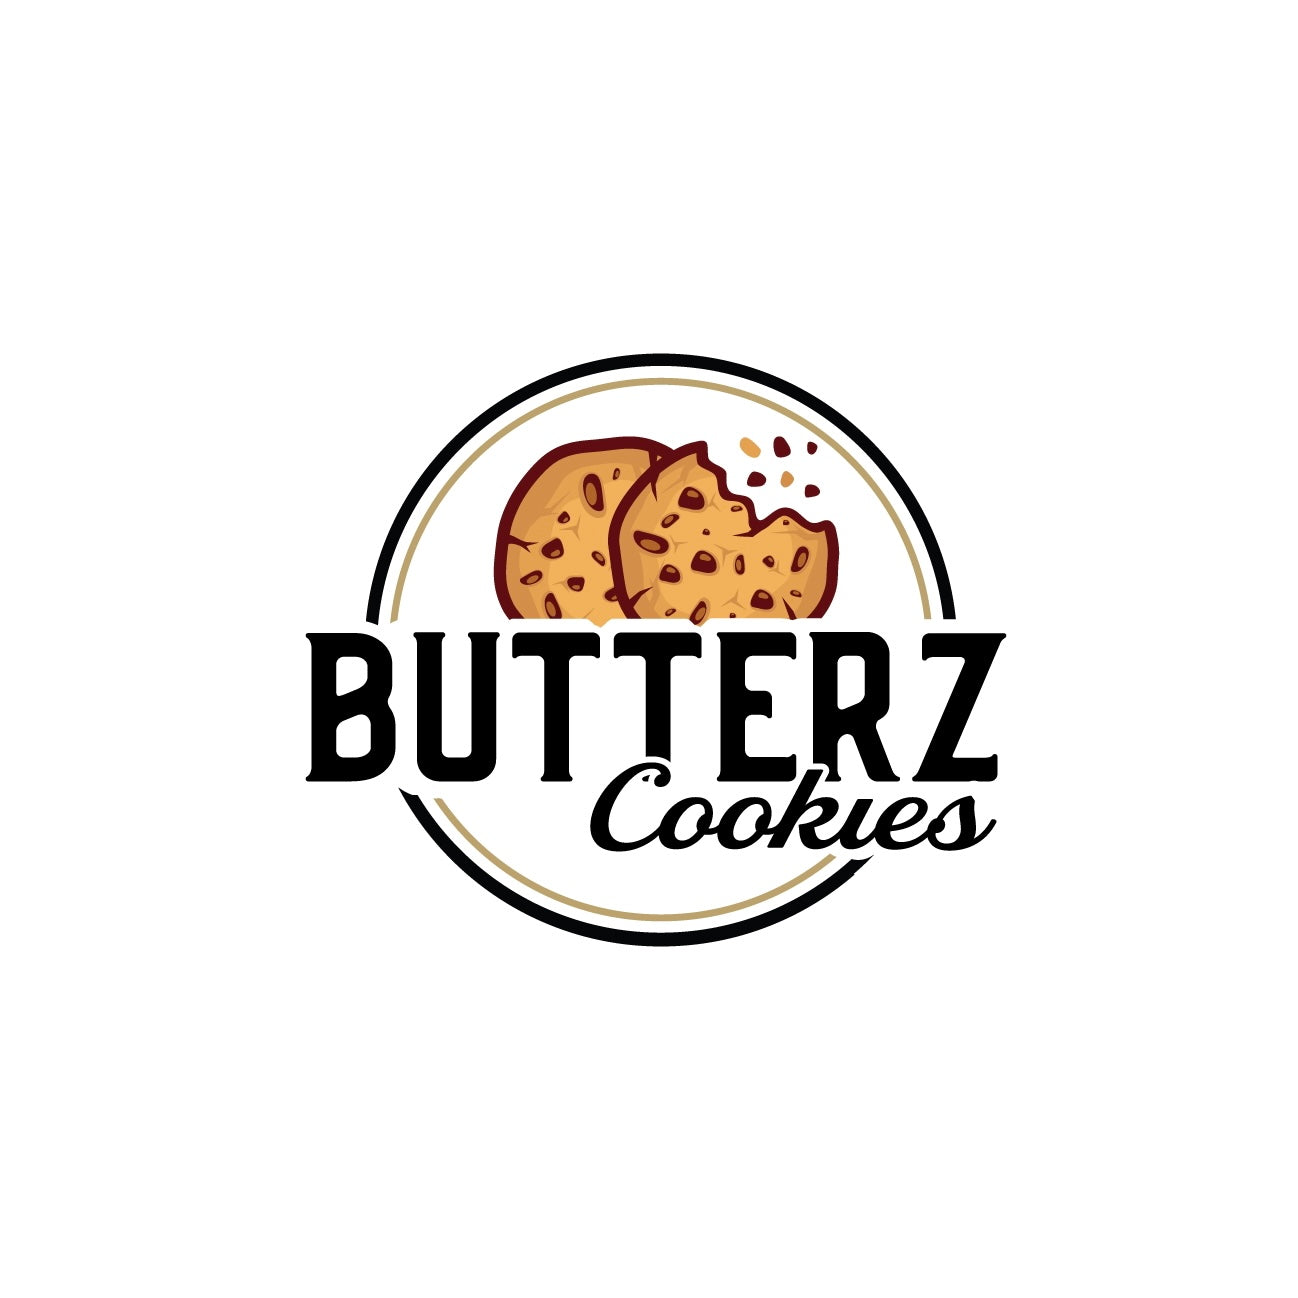 Butterz Cookies